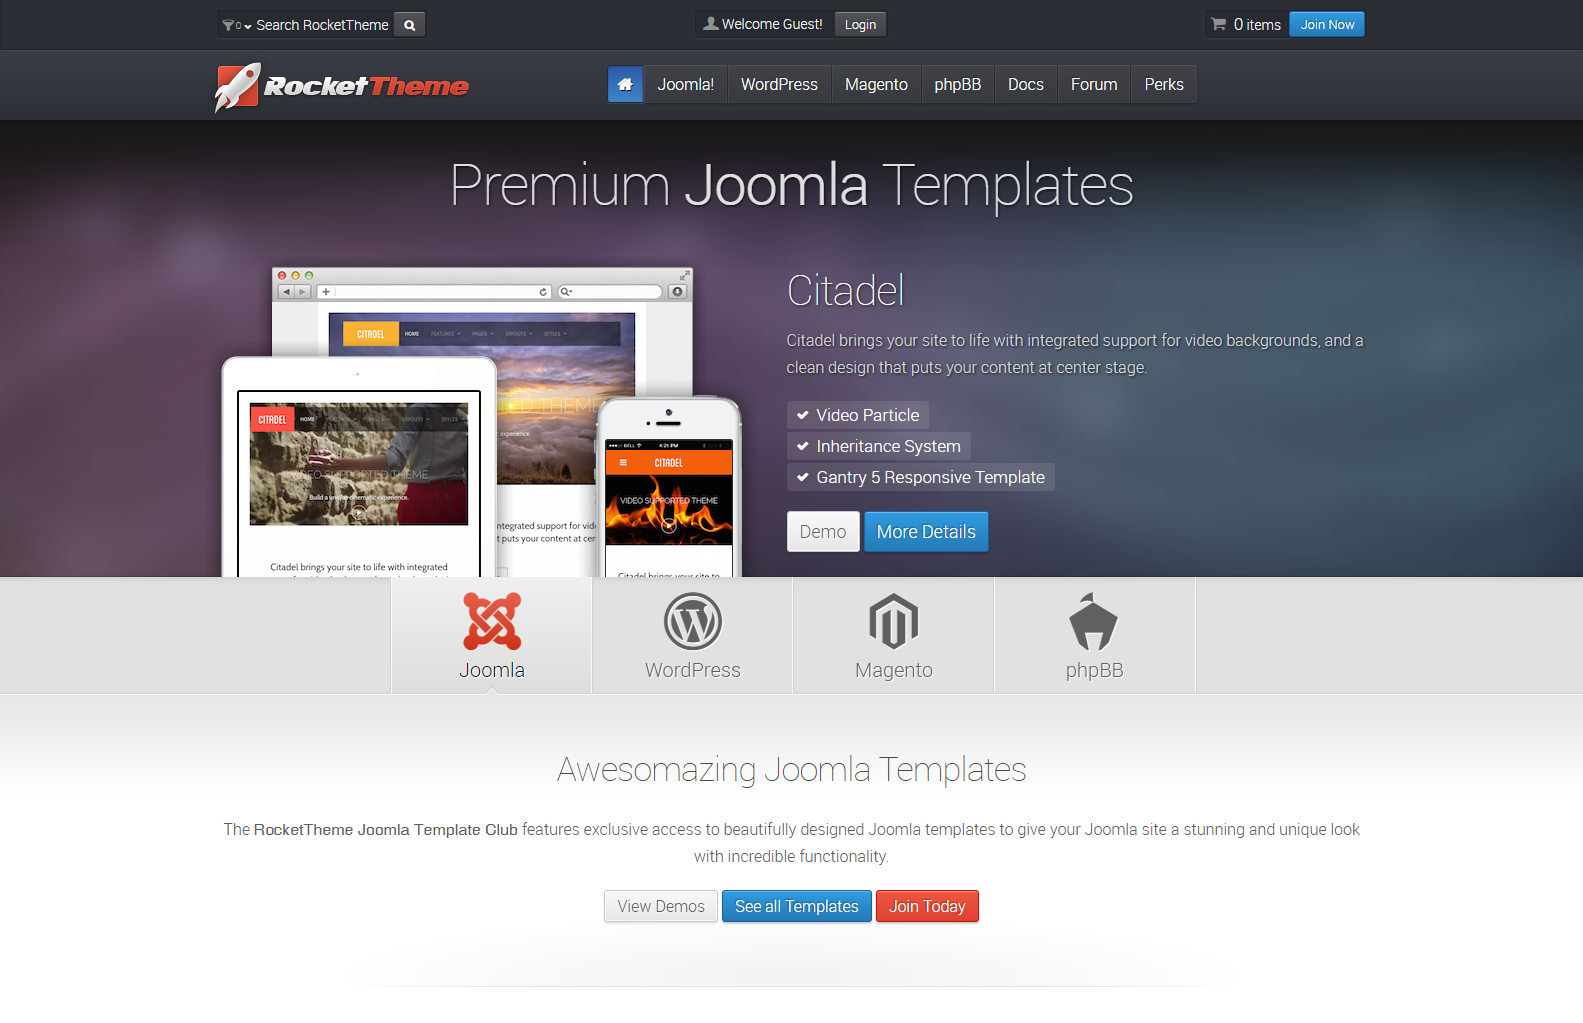 RocketTheme Joomla Templates WordPress Themes Magento Templates and phpBB Styles